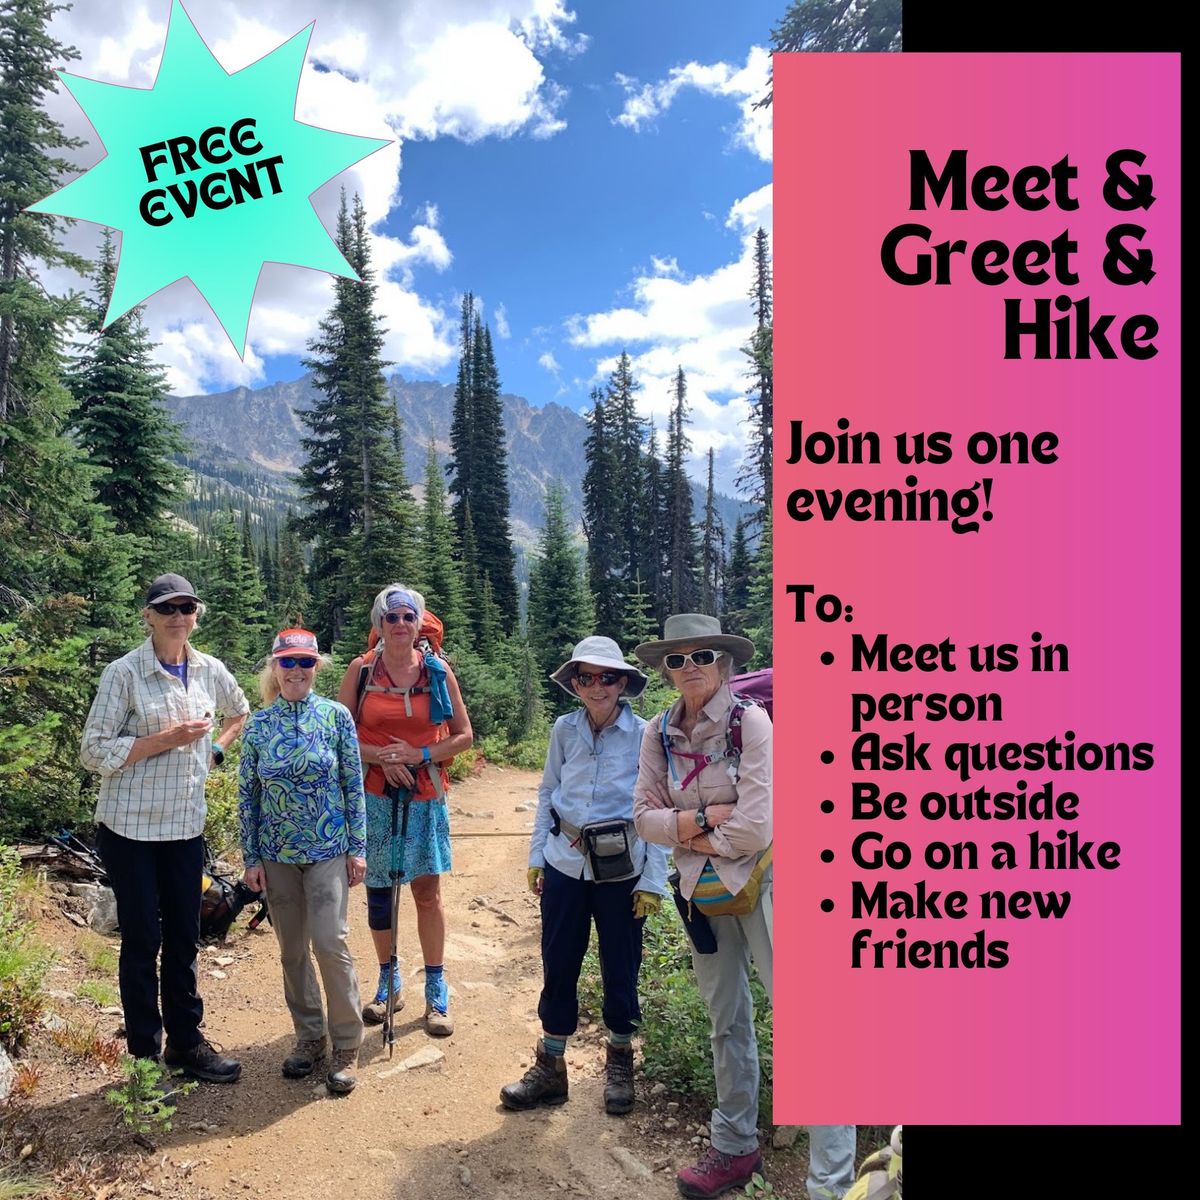 Meet & Greet & Hike